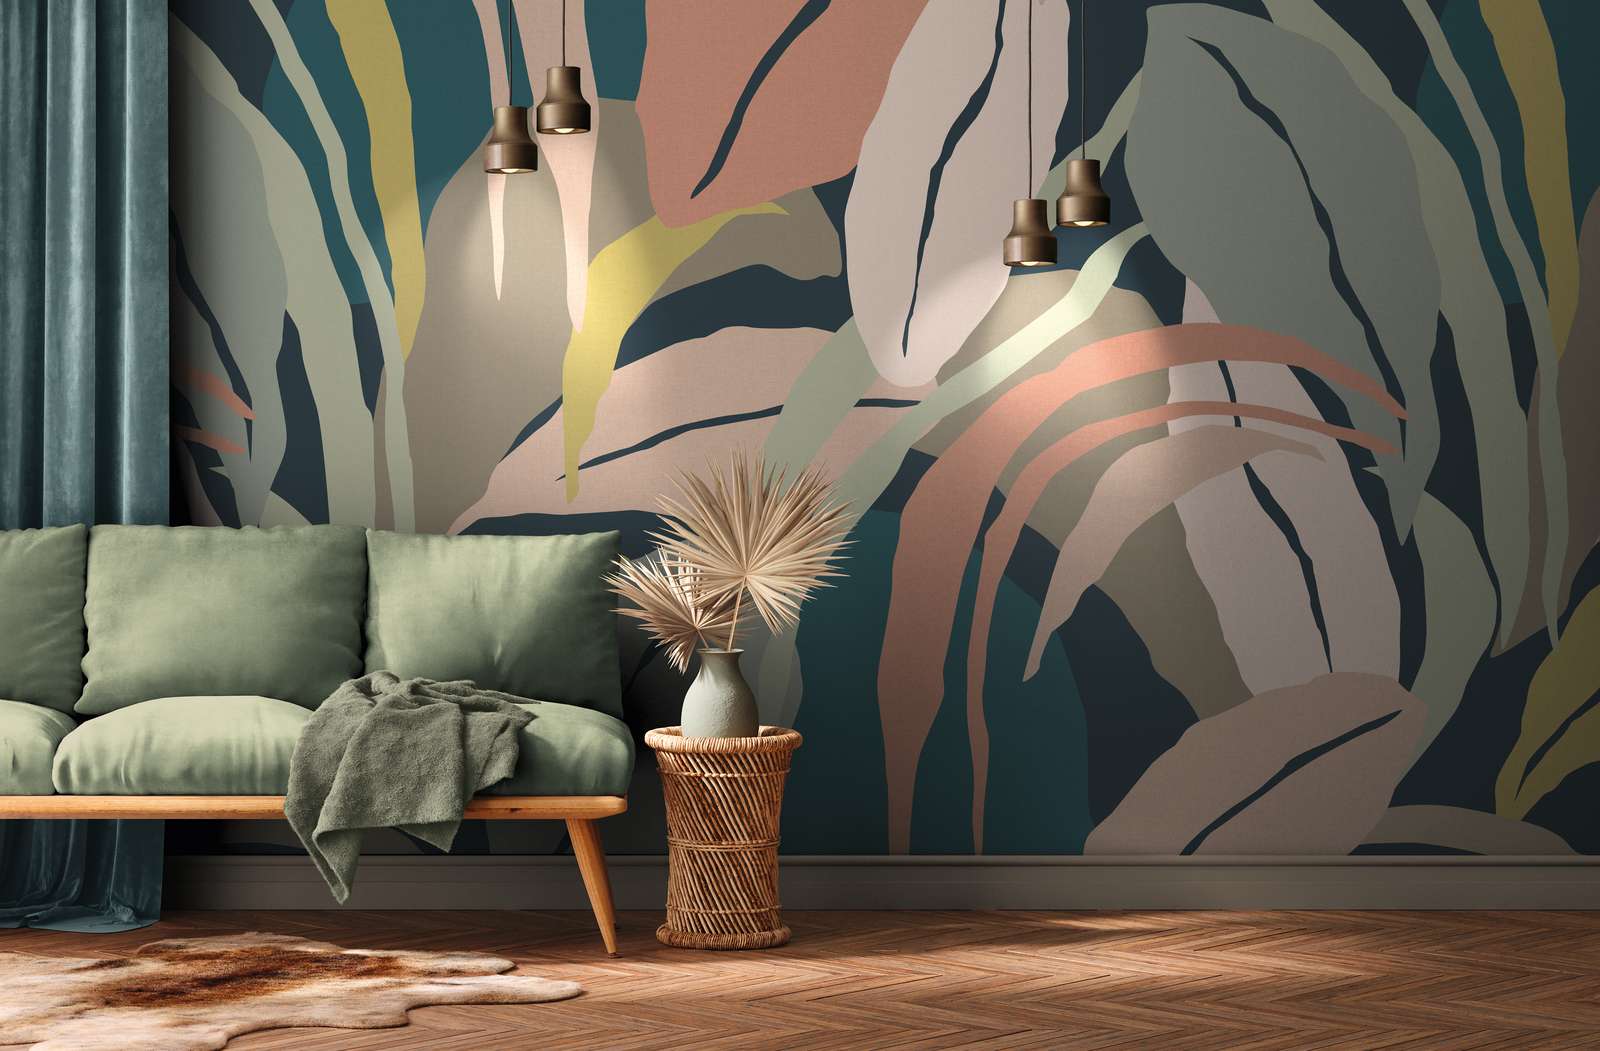             Abstract Leaf Pattern Wallpaper - Beige, Multicoloured - Matt Smooth Nonwoven
        